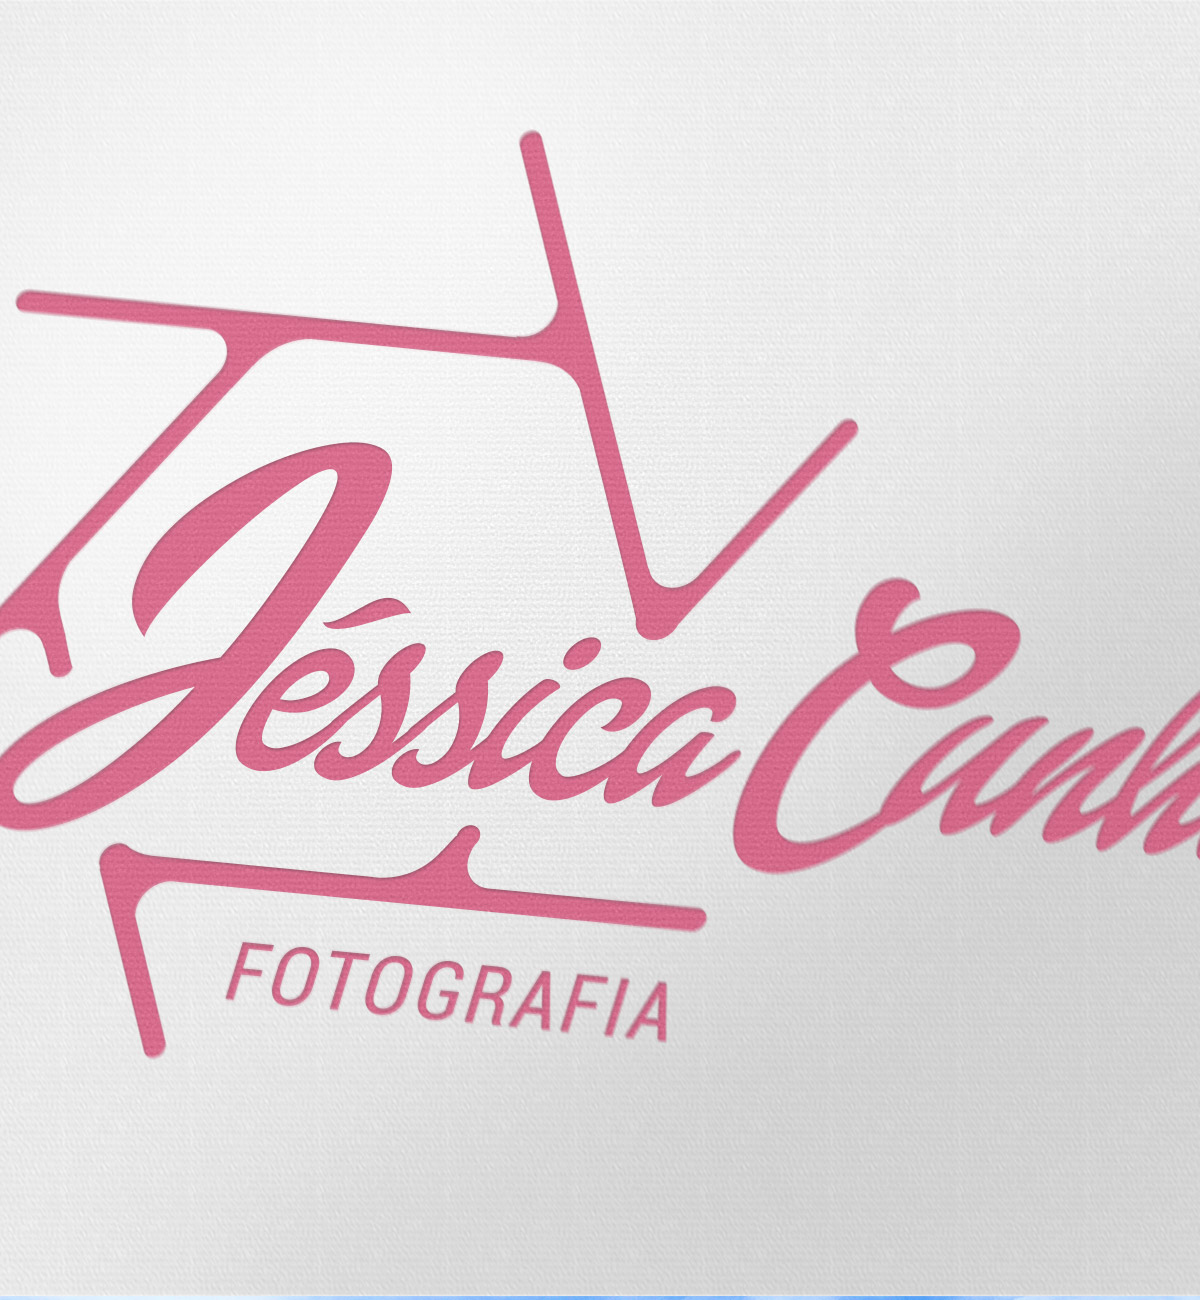 Jéssica Cunha Fotografia - Logotipo